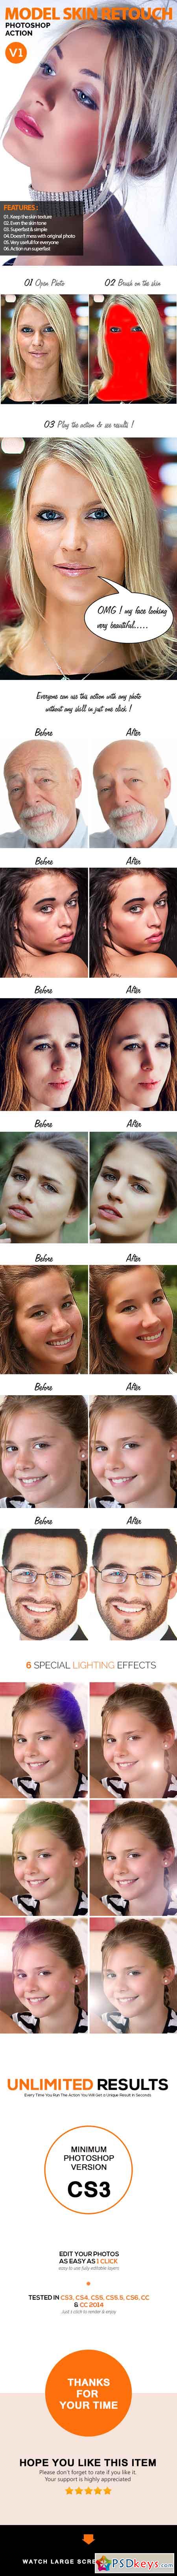 Model Skin Retouch V1 - Photoshop Action 10795644